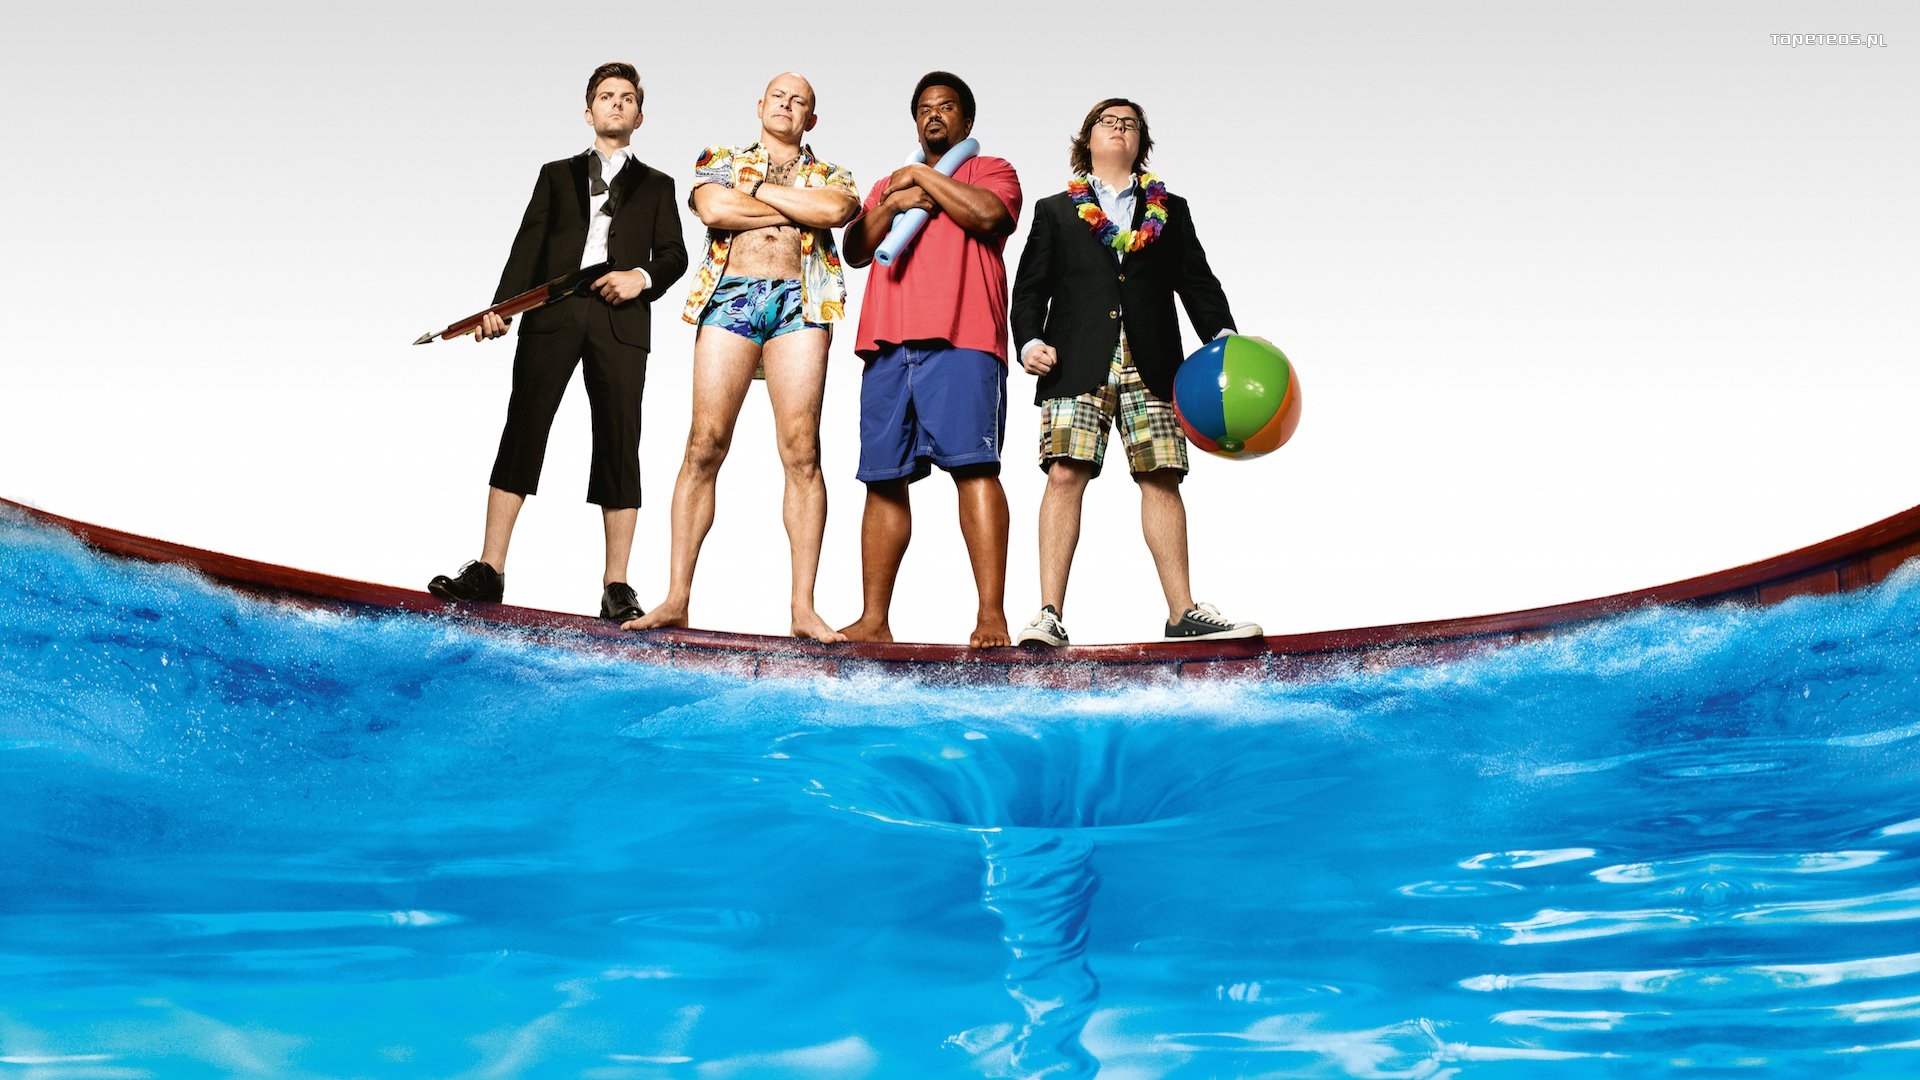 Jutro bedzie futro 2 (2015) Hot Tub Time Machine 2 003 Adam, Lou, Nick, Jacob